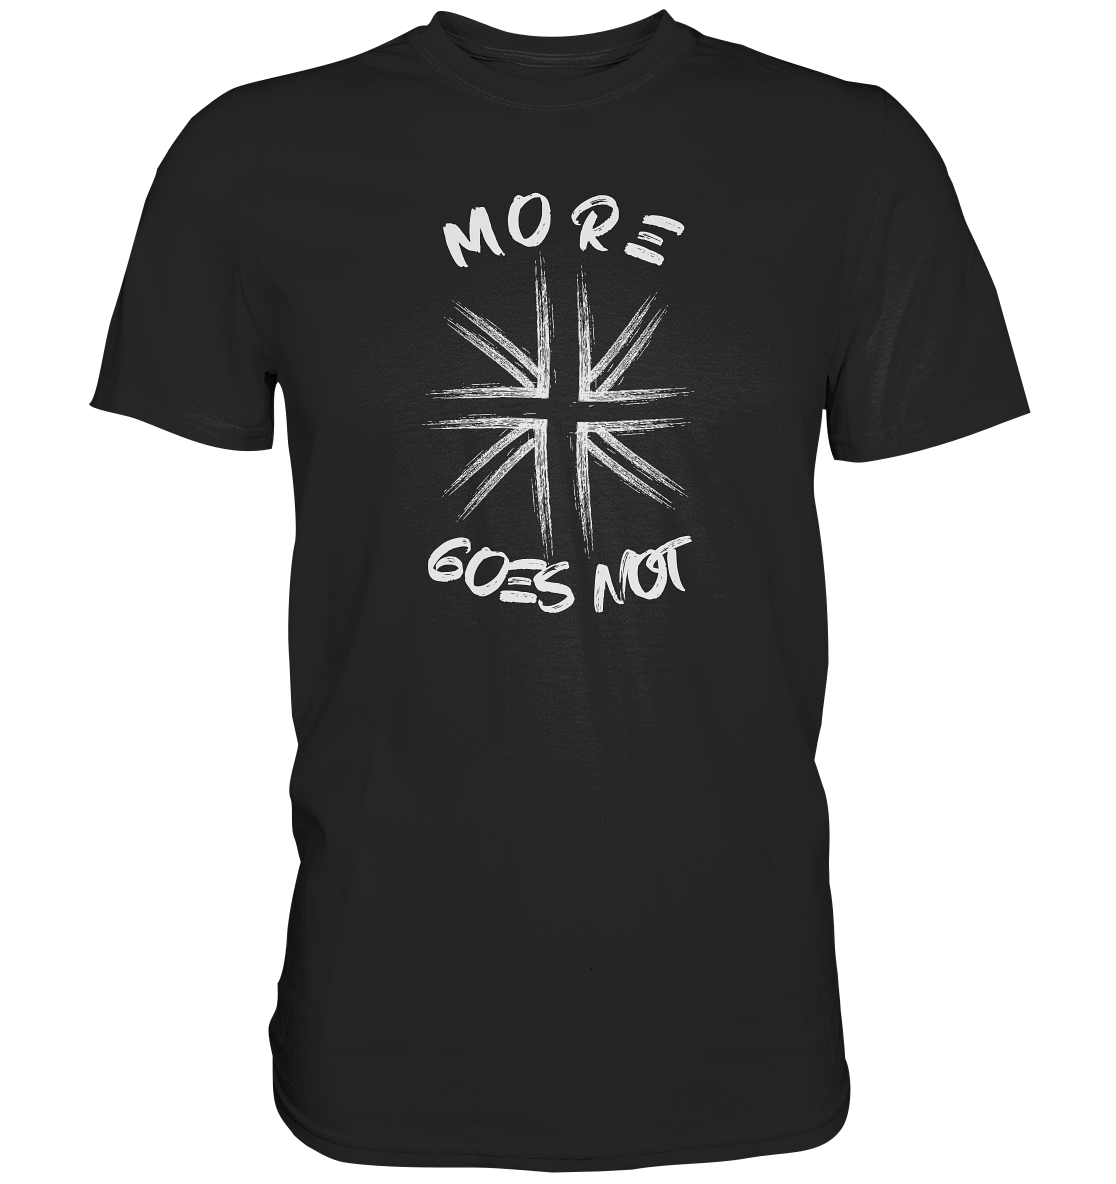 "More goes not" - Premium Shirt